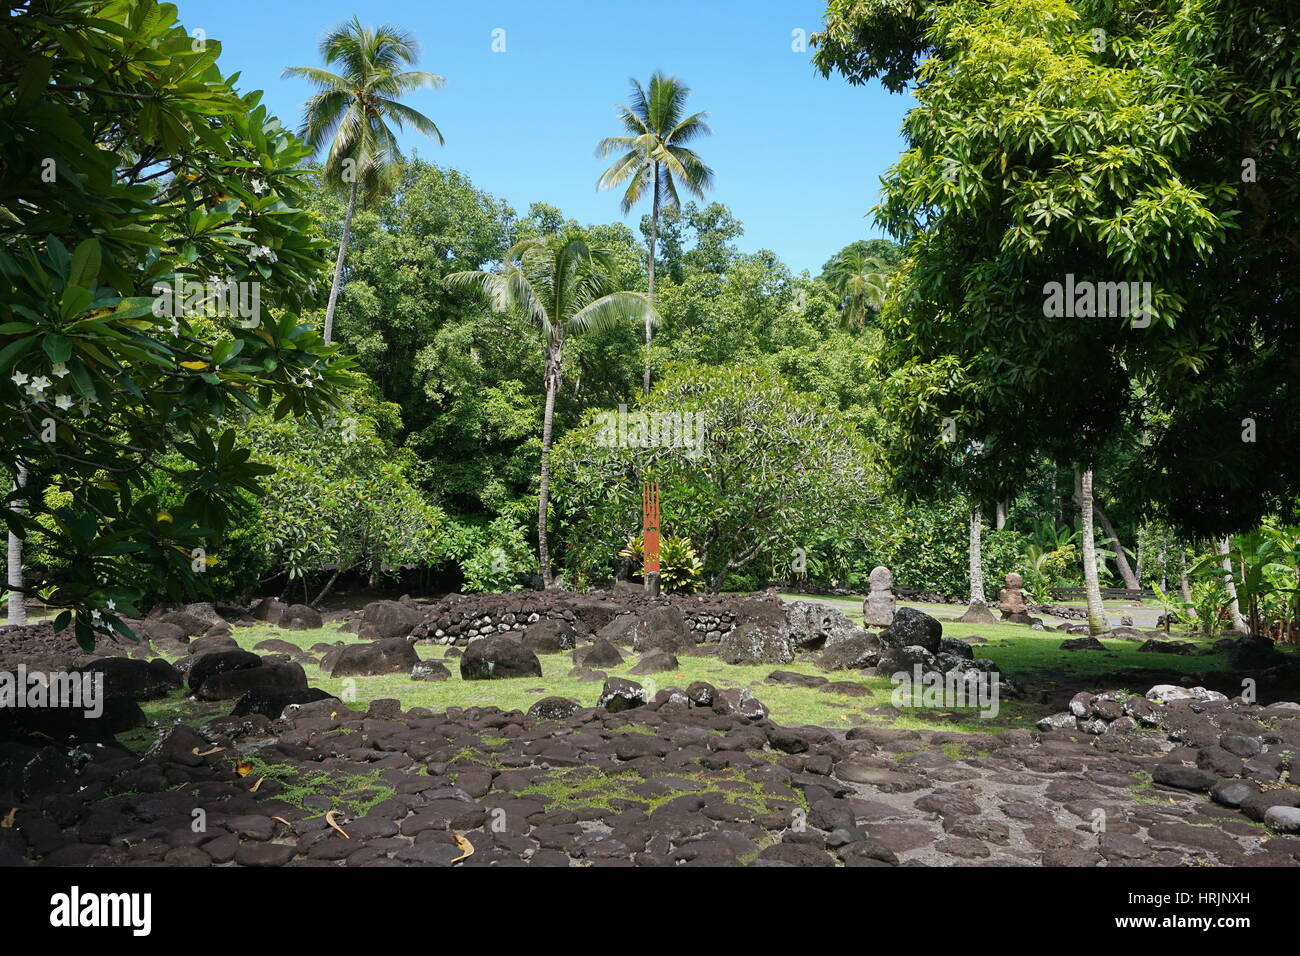 French Polynesia Tahiti marae ancient stone structure with tropical vegetation, Arahurahu, Oceania Stock Photo